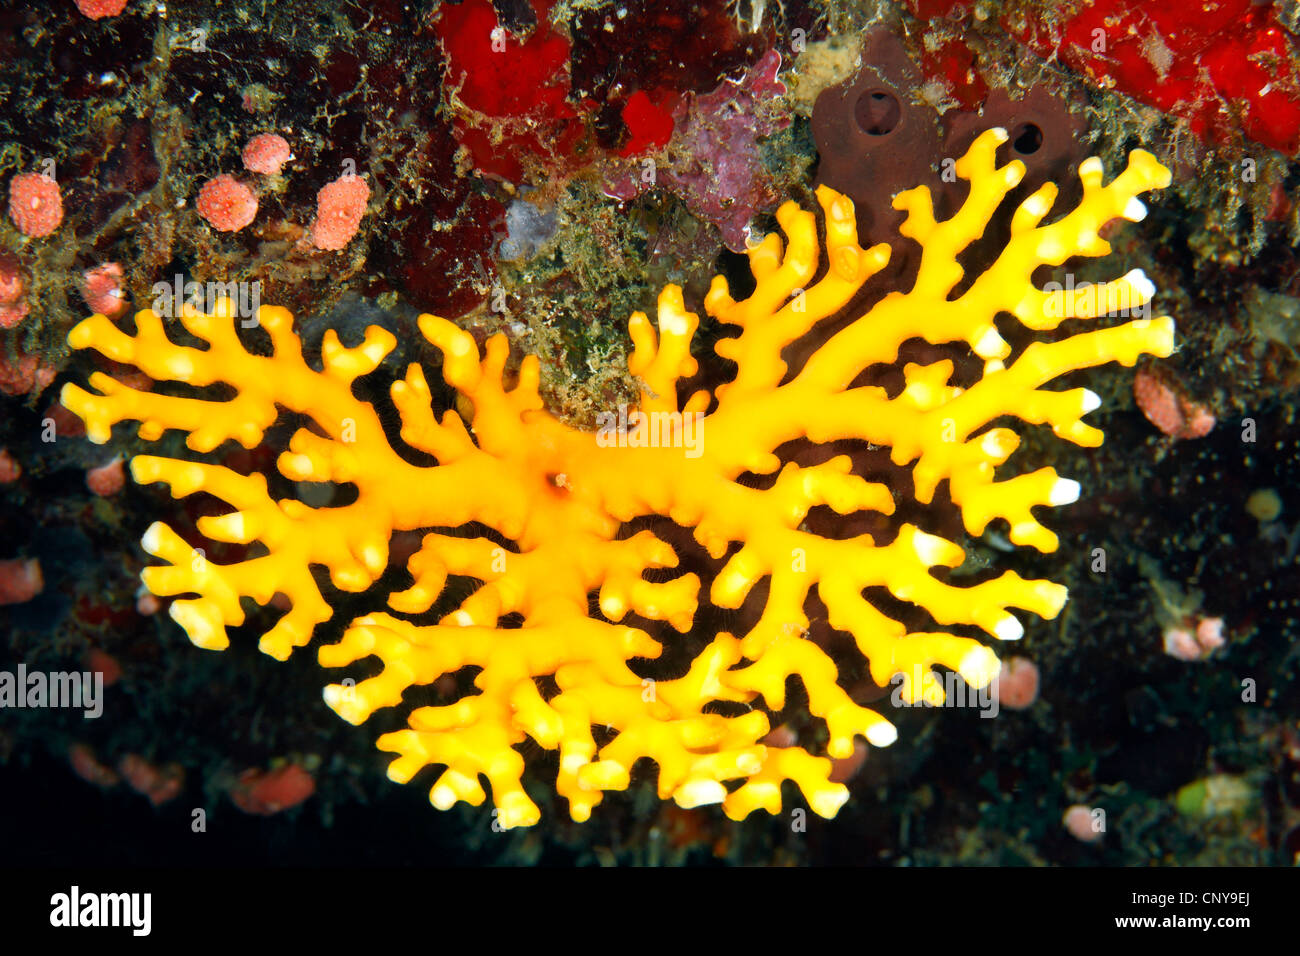 Yellow Lace Coral, Distichopora sp. Stock Photo